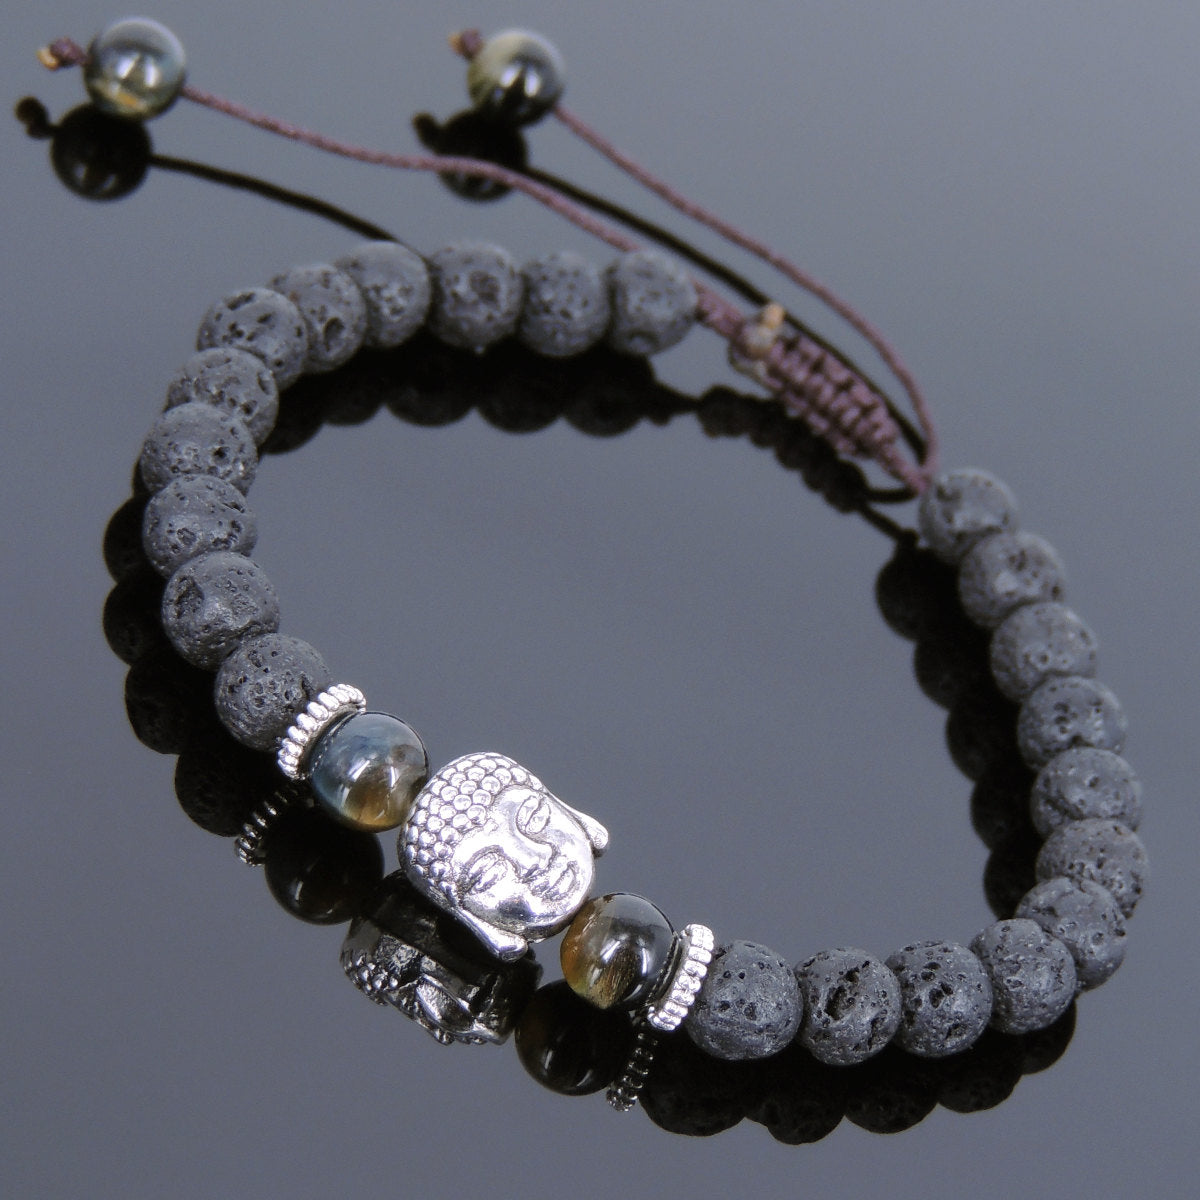 6mm Brown Blue Tiger Eye & Lava Rock Adjustable Braided Stone Bracelet with Tibetan Silver Spacers & Guanyin Buddha Bead - Handmade by Gem & Silver TSB220